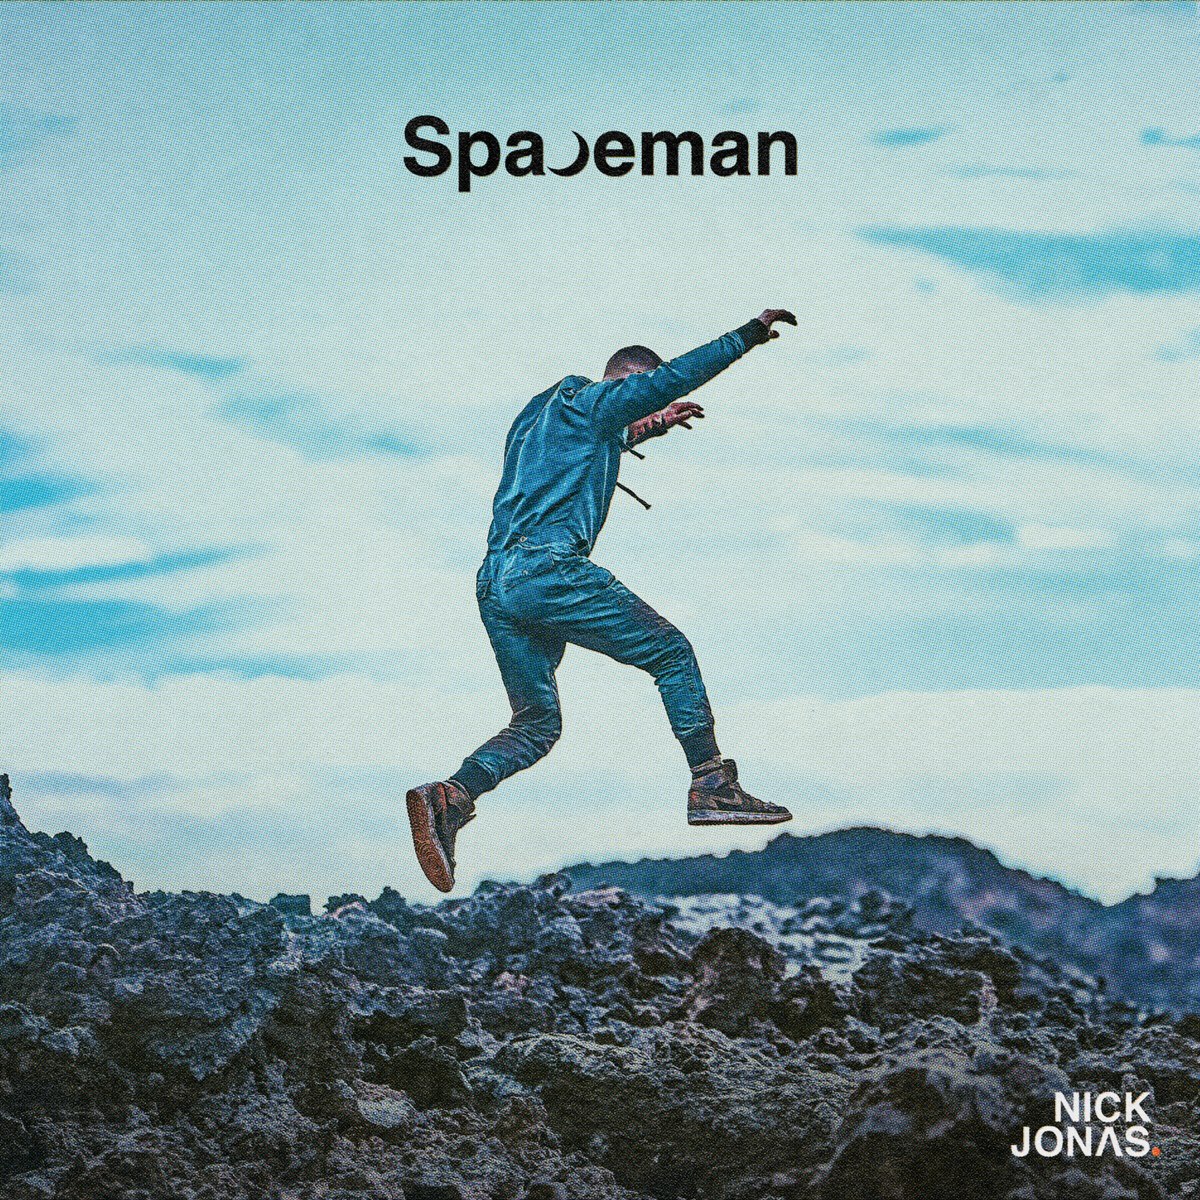 Spaceman - Album by Nick Jonas - Apple Music